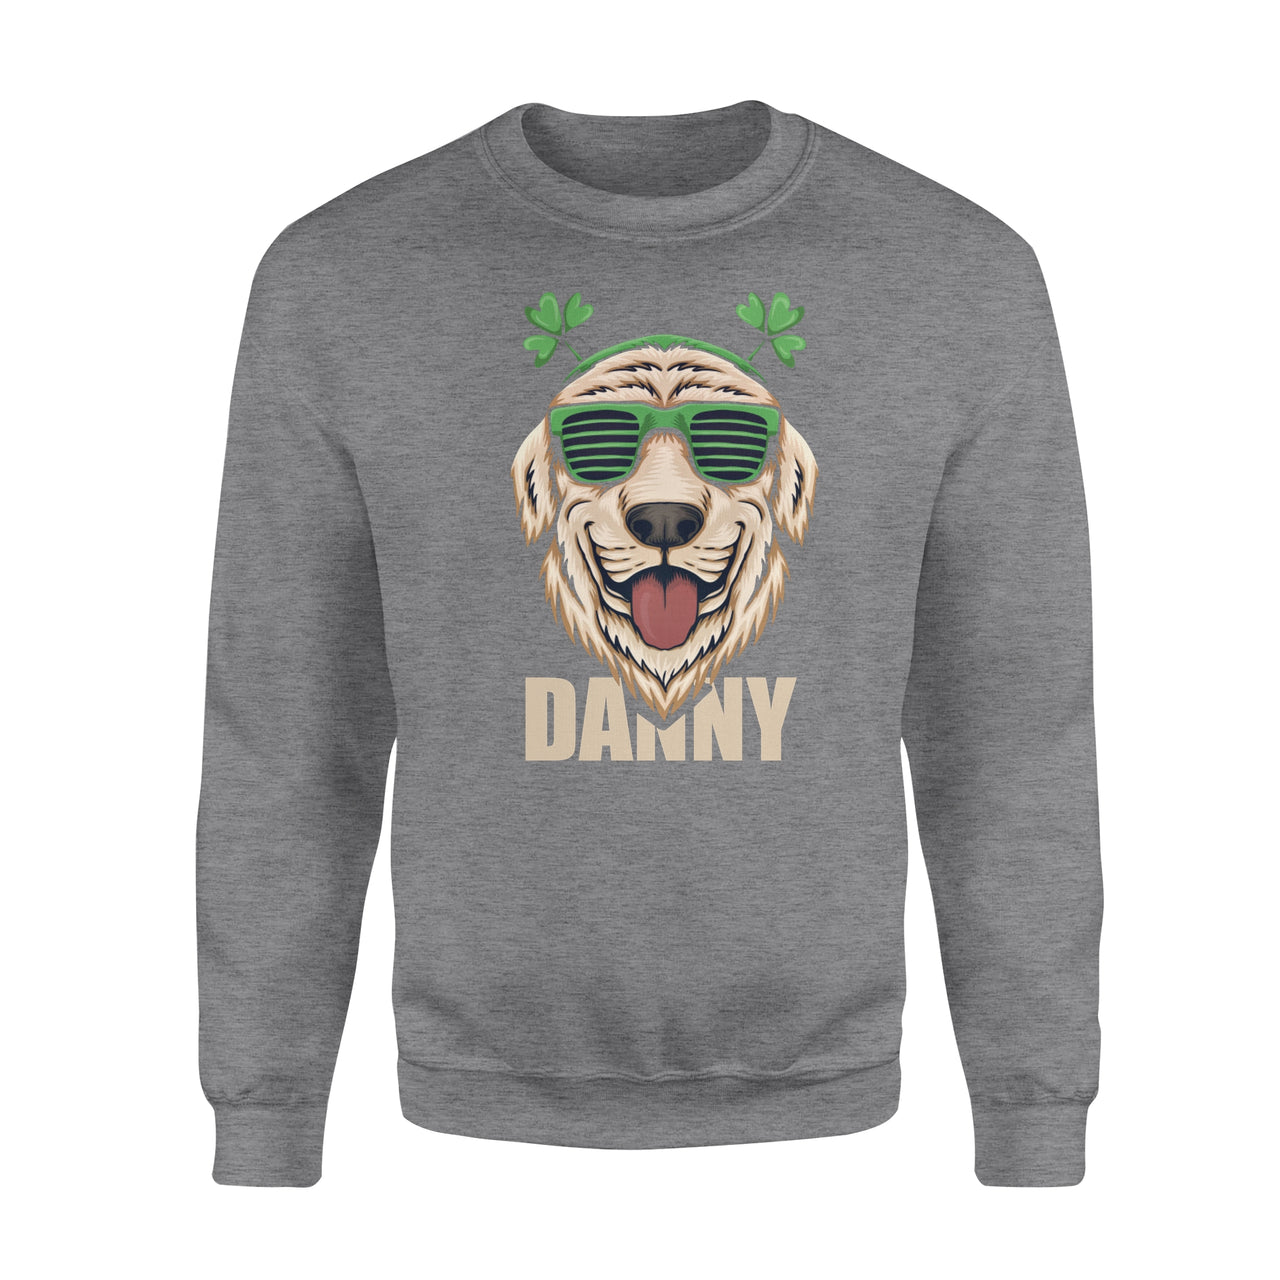 Personalized St. Patrick Gift Idea - Coolest Golden Retriever Dog - Standard Crew Neck Sweatshirt